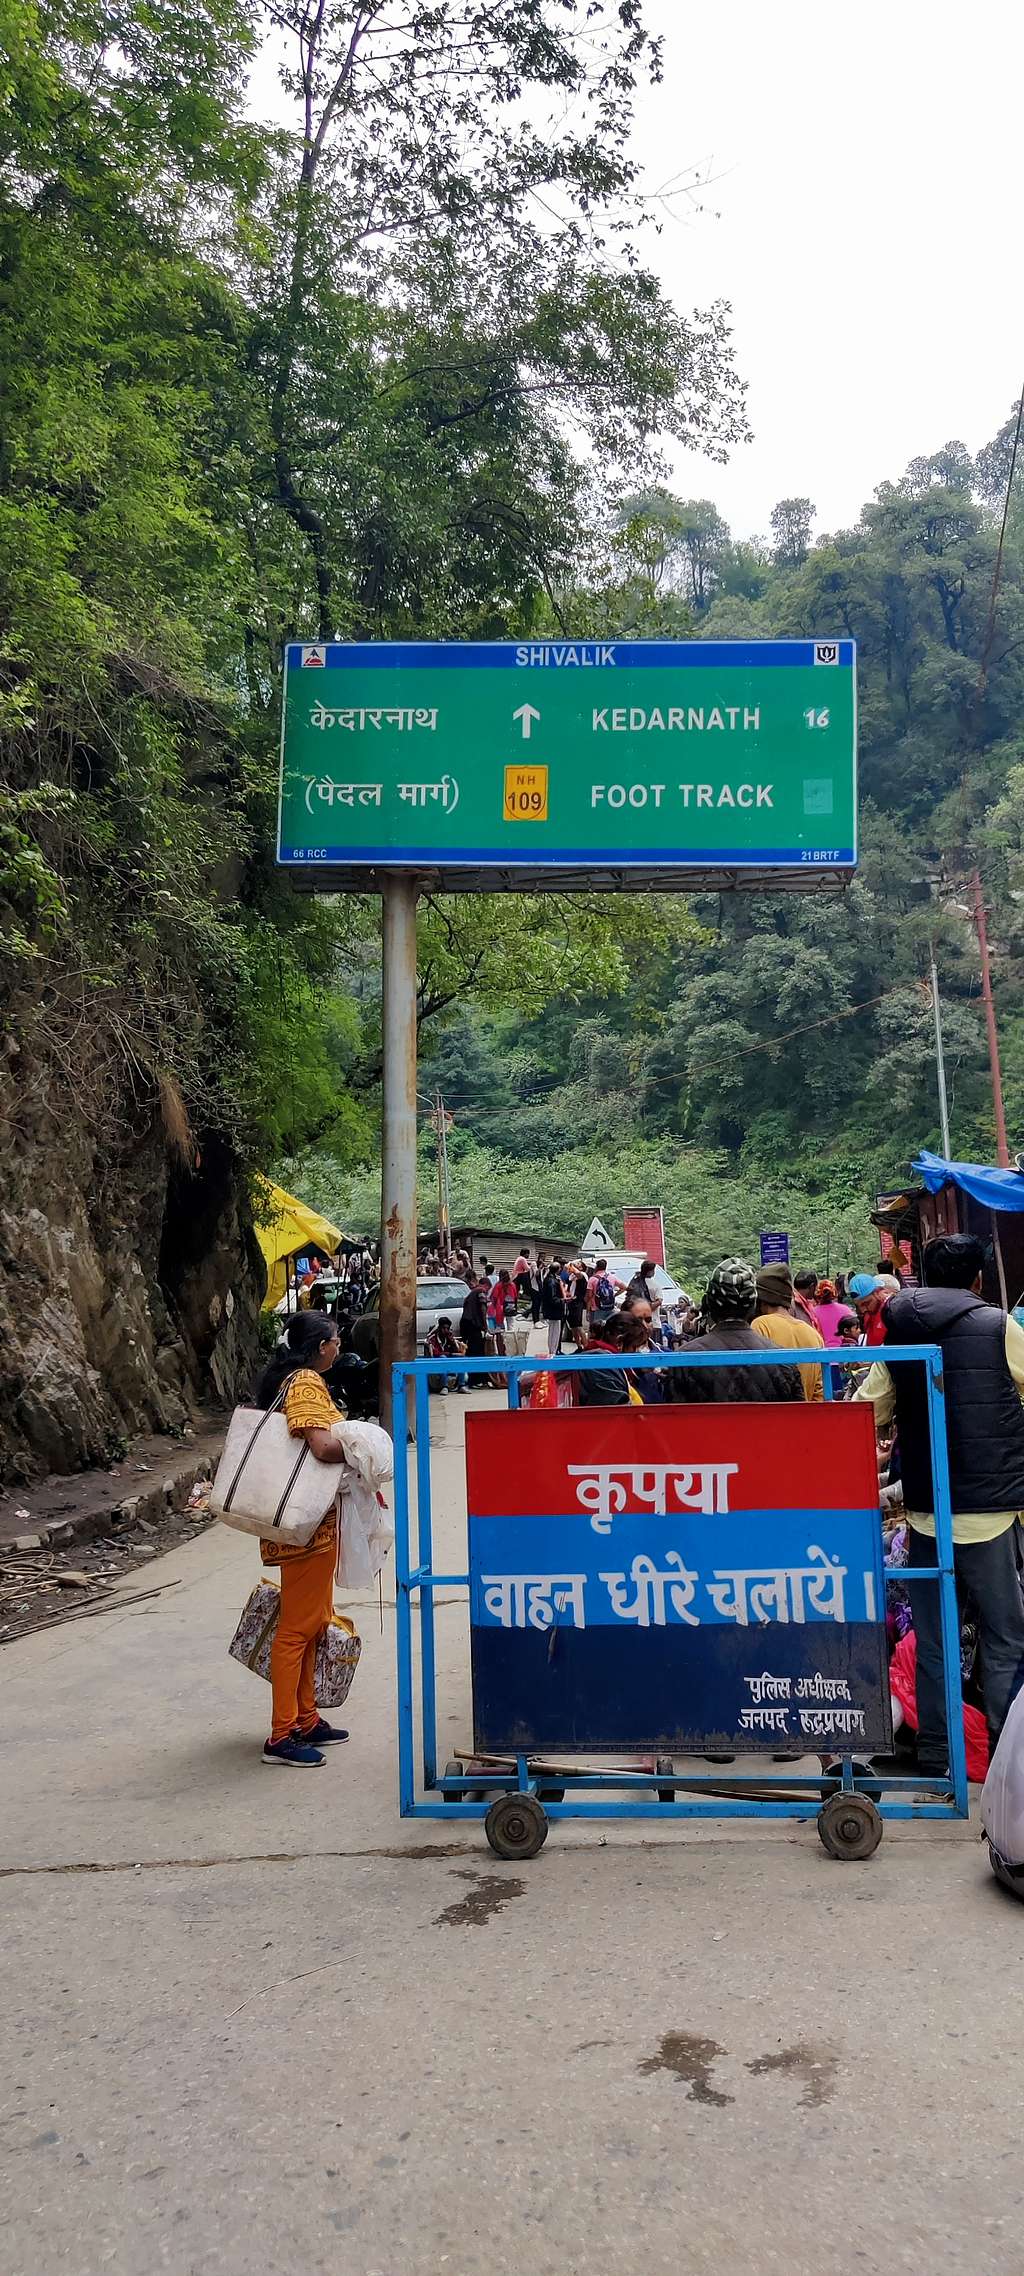 First board of Kedarnath on the trail